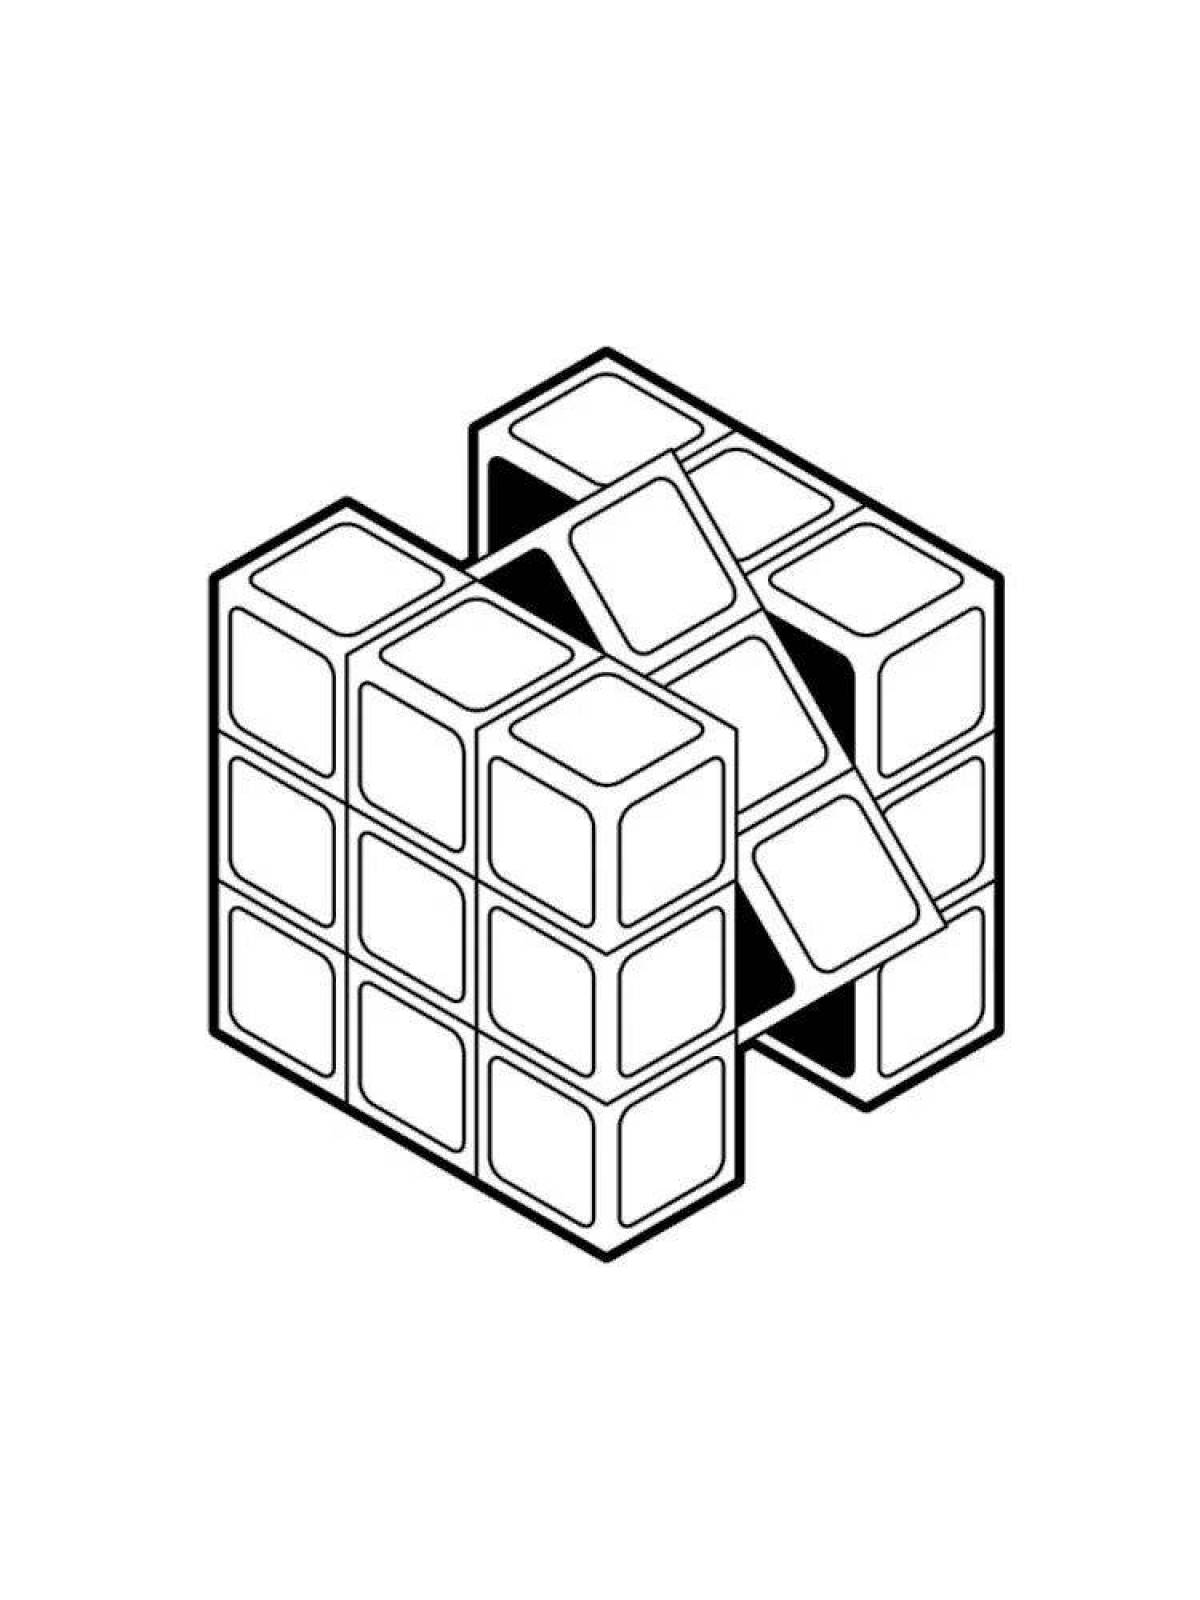 Detailed rubik's cube coloring